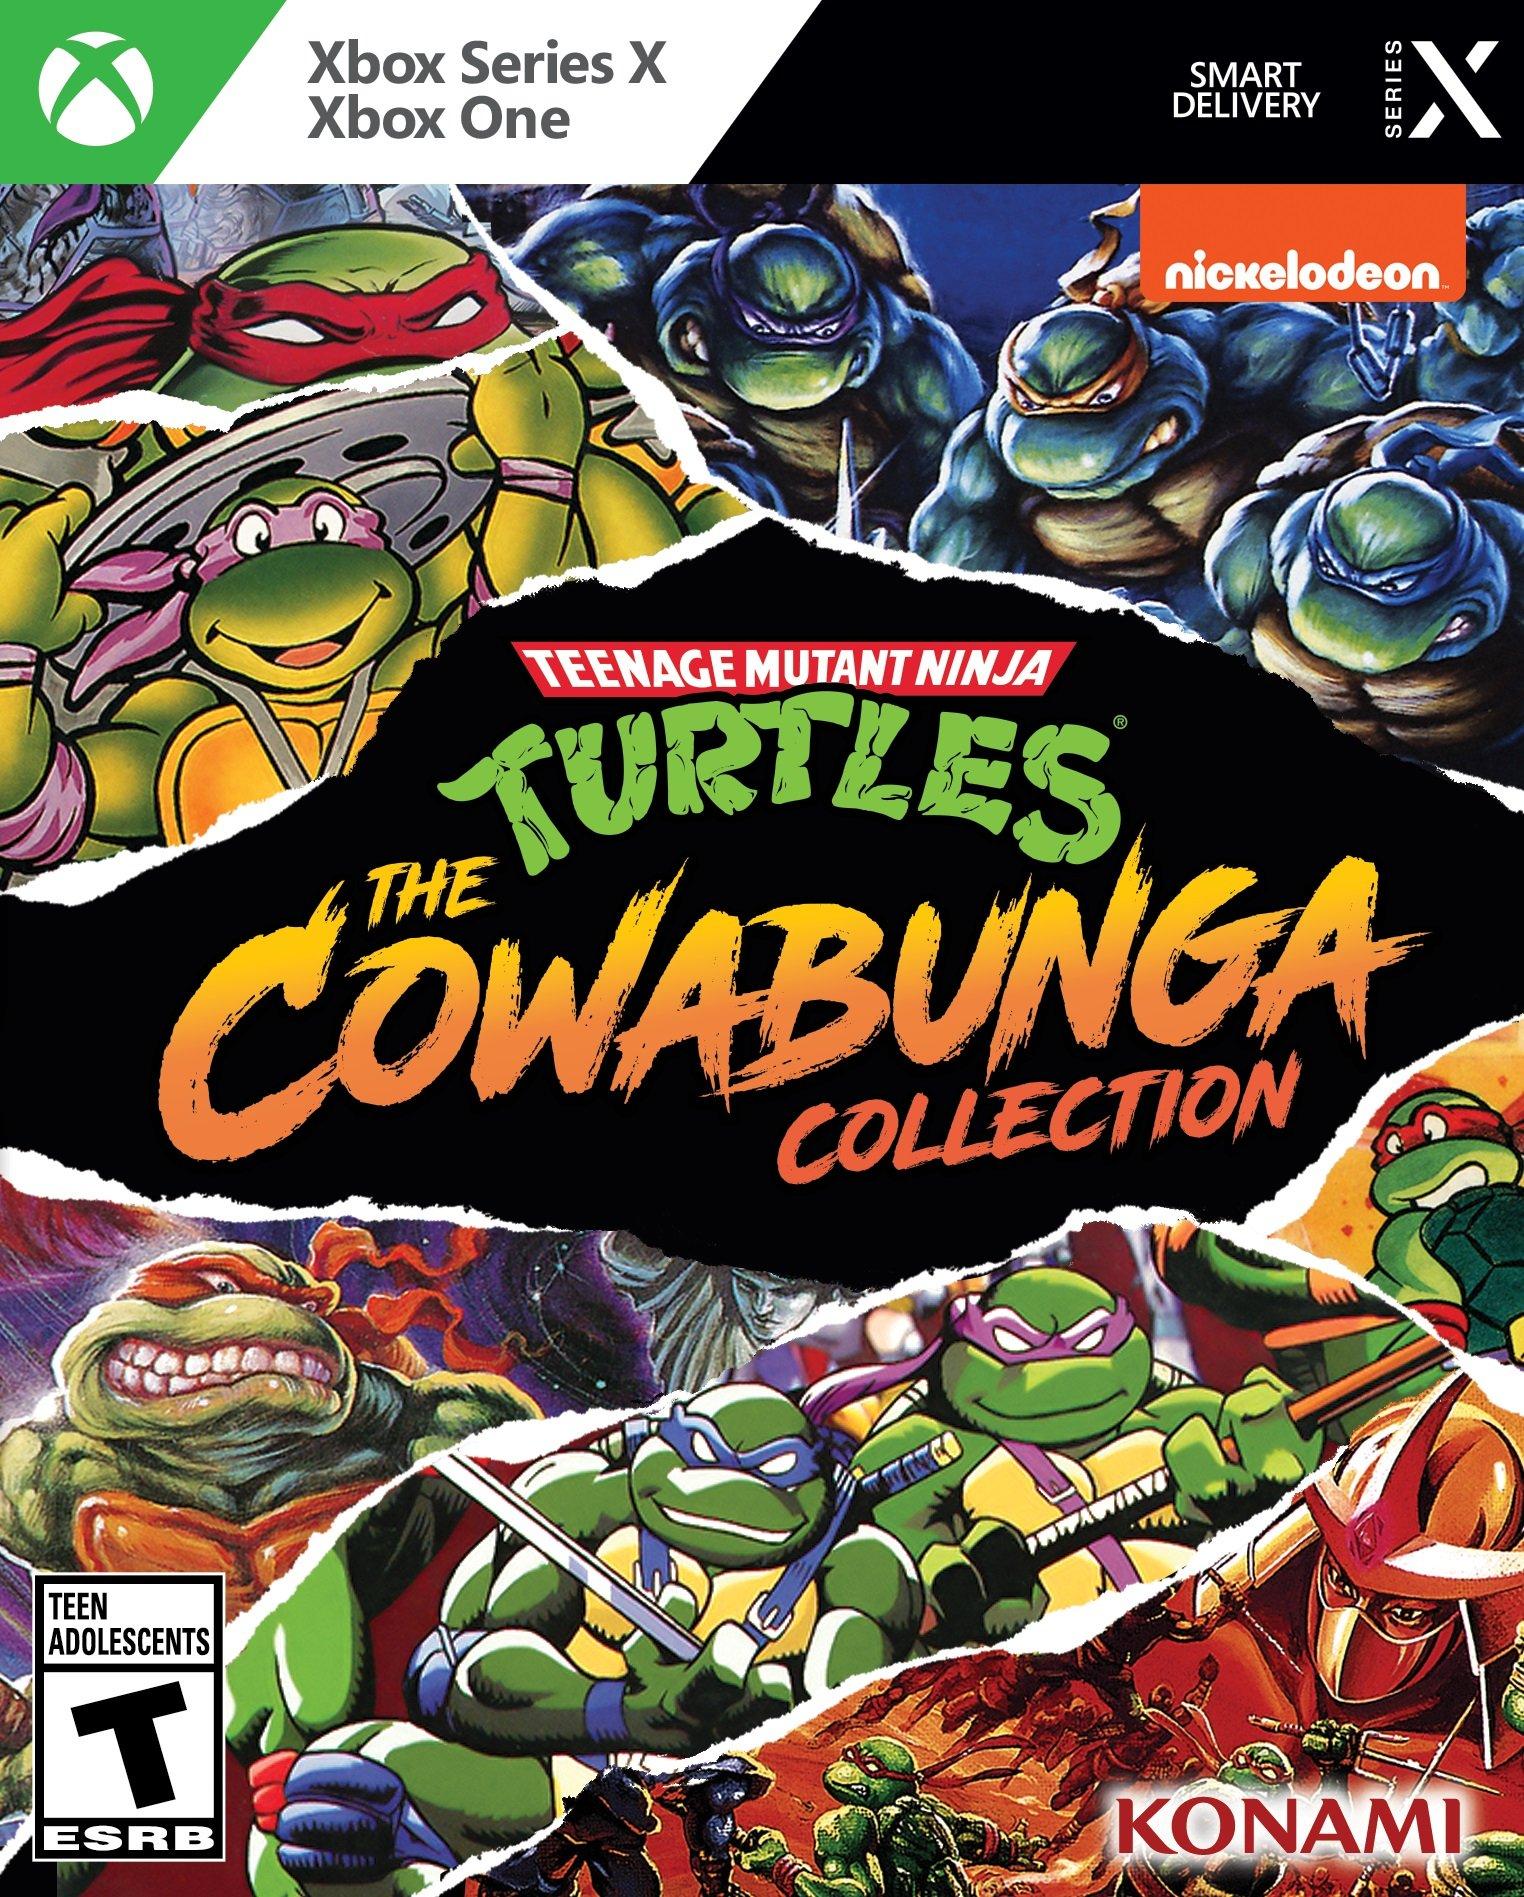 Teenage Mutant Ninja Turtles: The Cowabunga Collection launches